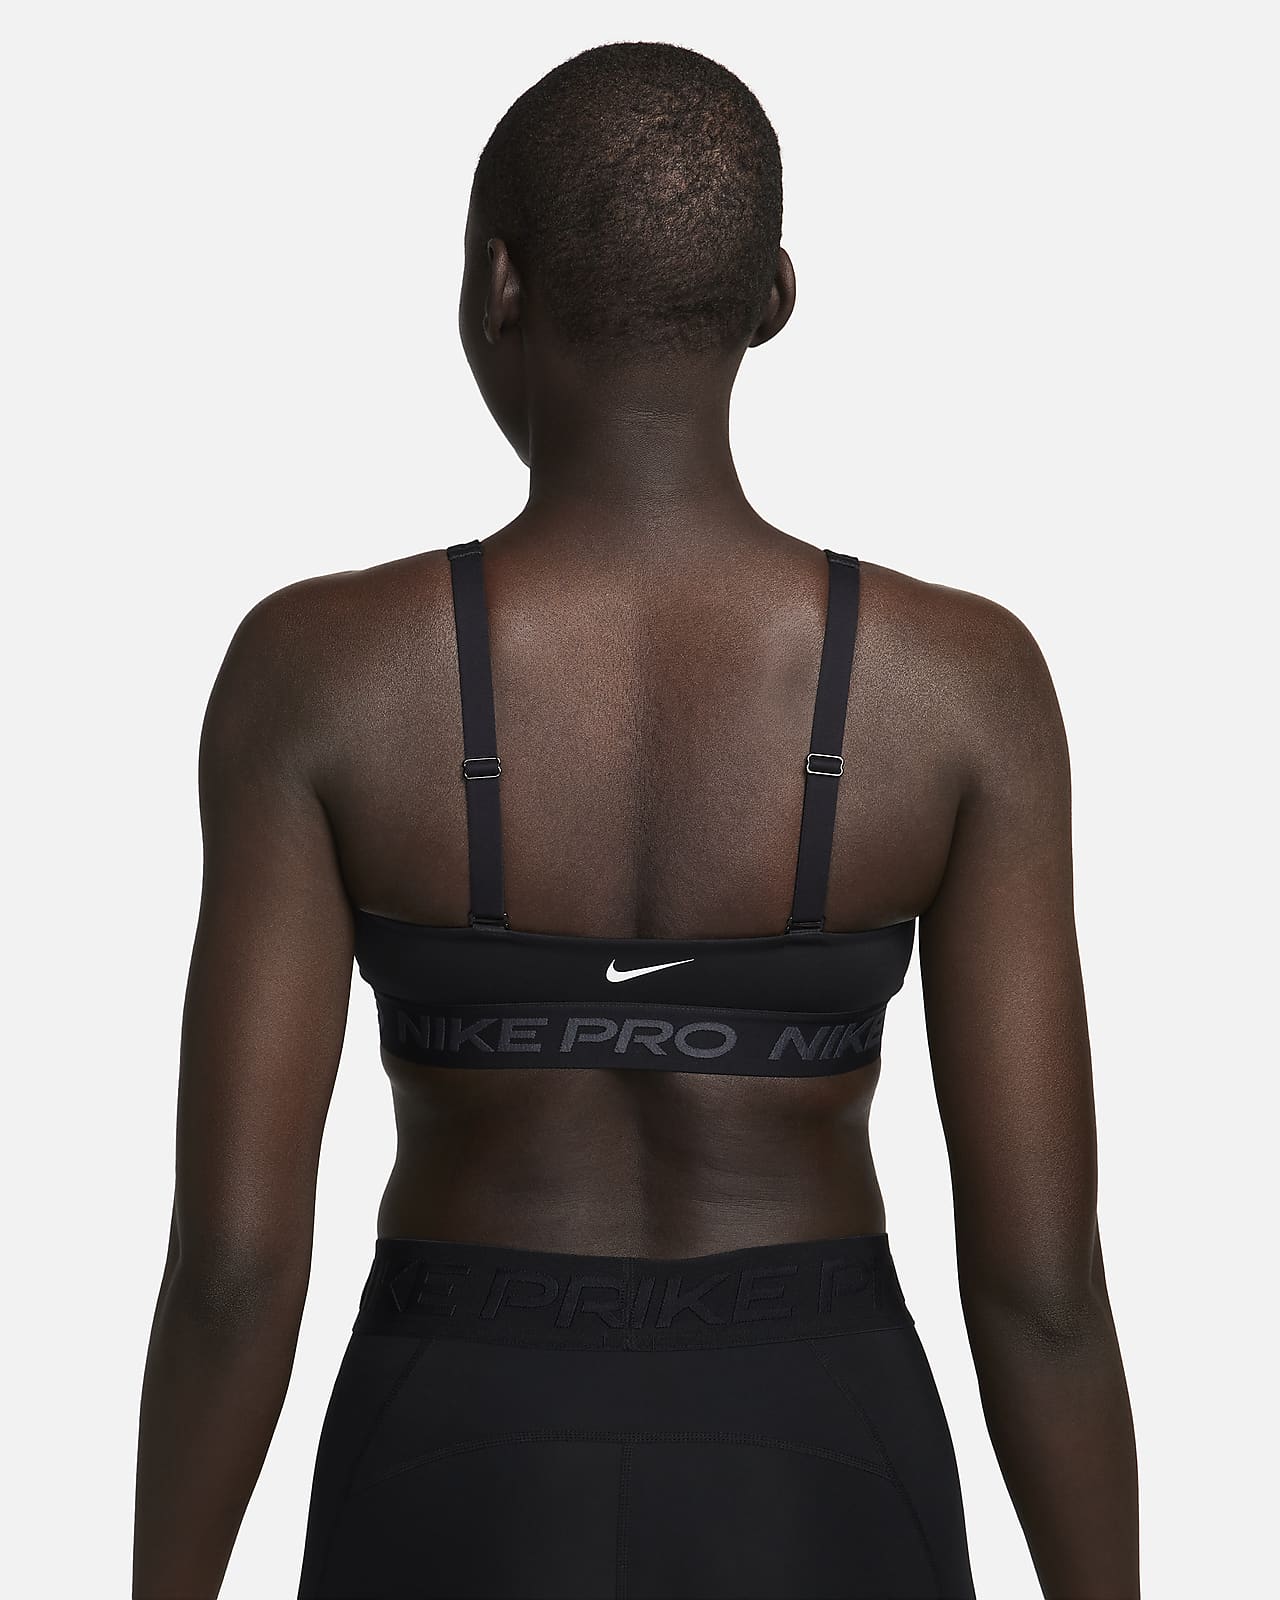 Buy Nike Women's Pro Indy Sports Bra (Black/White, Large) at